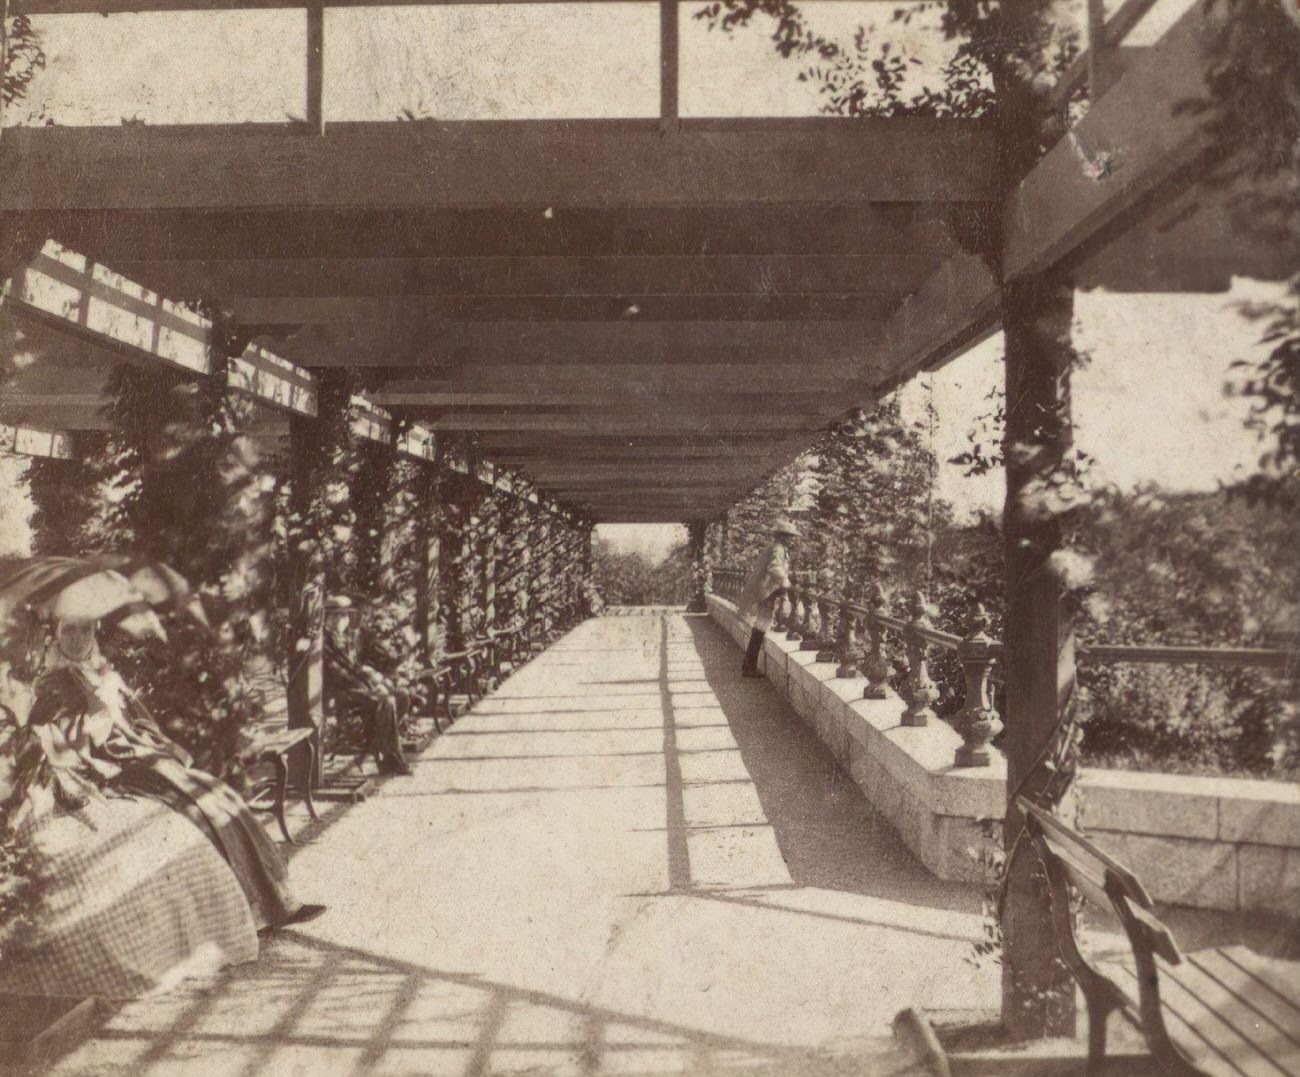 Covered Promenade In Prospect Park, Brooklyn, 1910